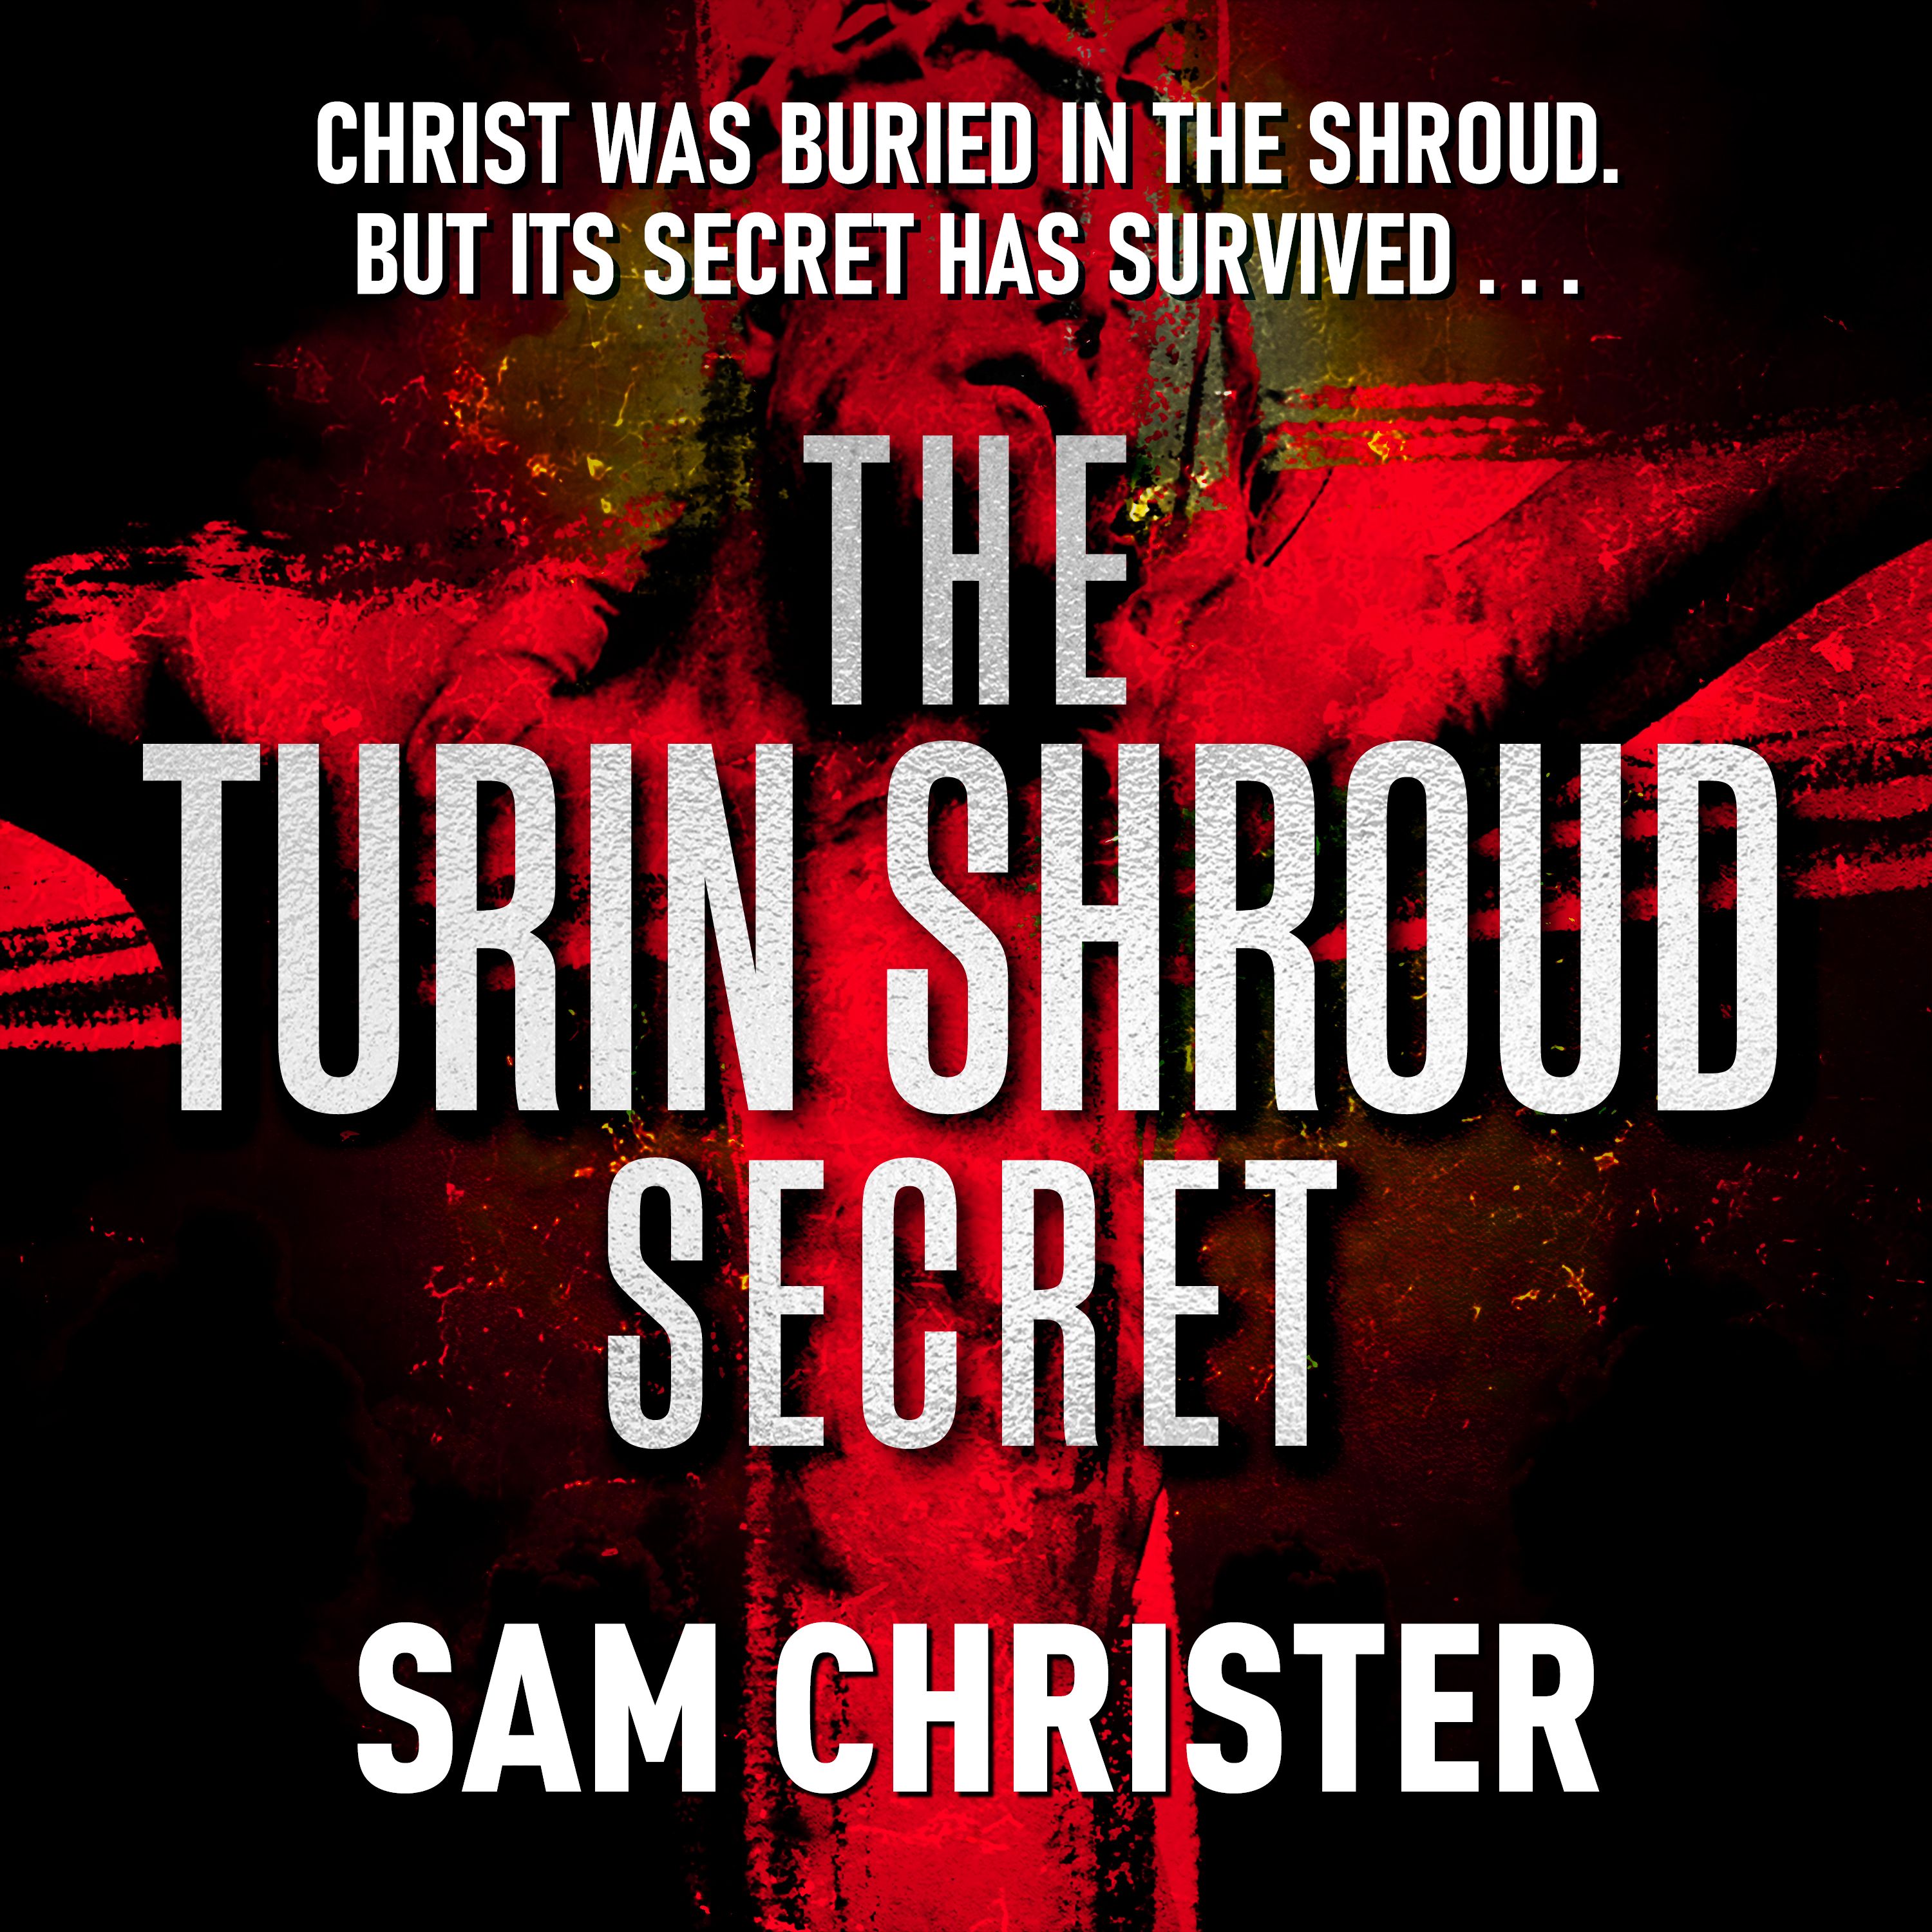 The Turin Shroud Secret, ljudbok av Sam Christer